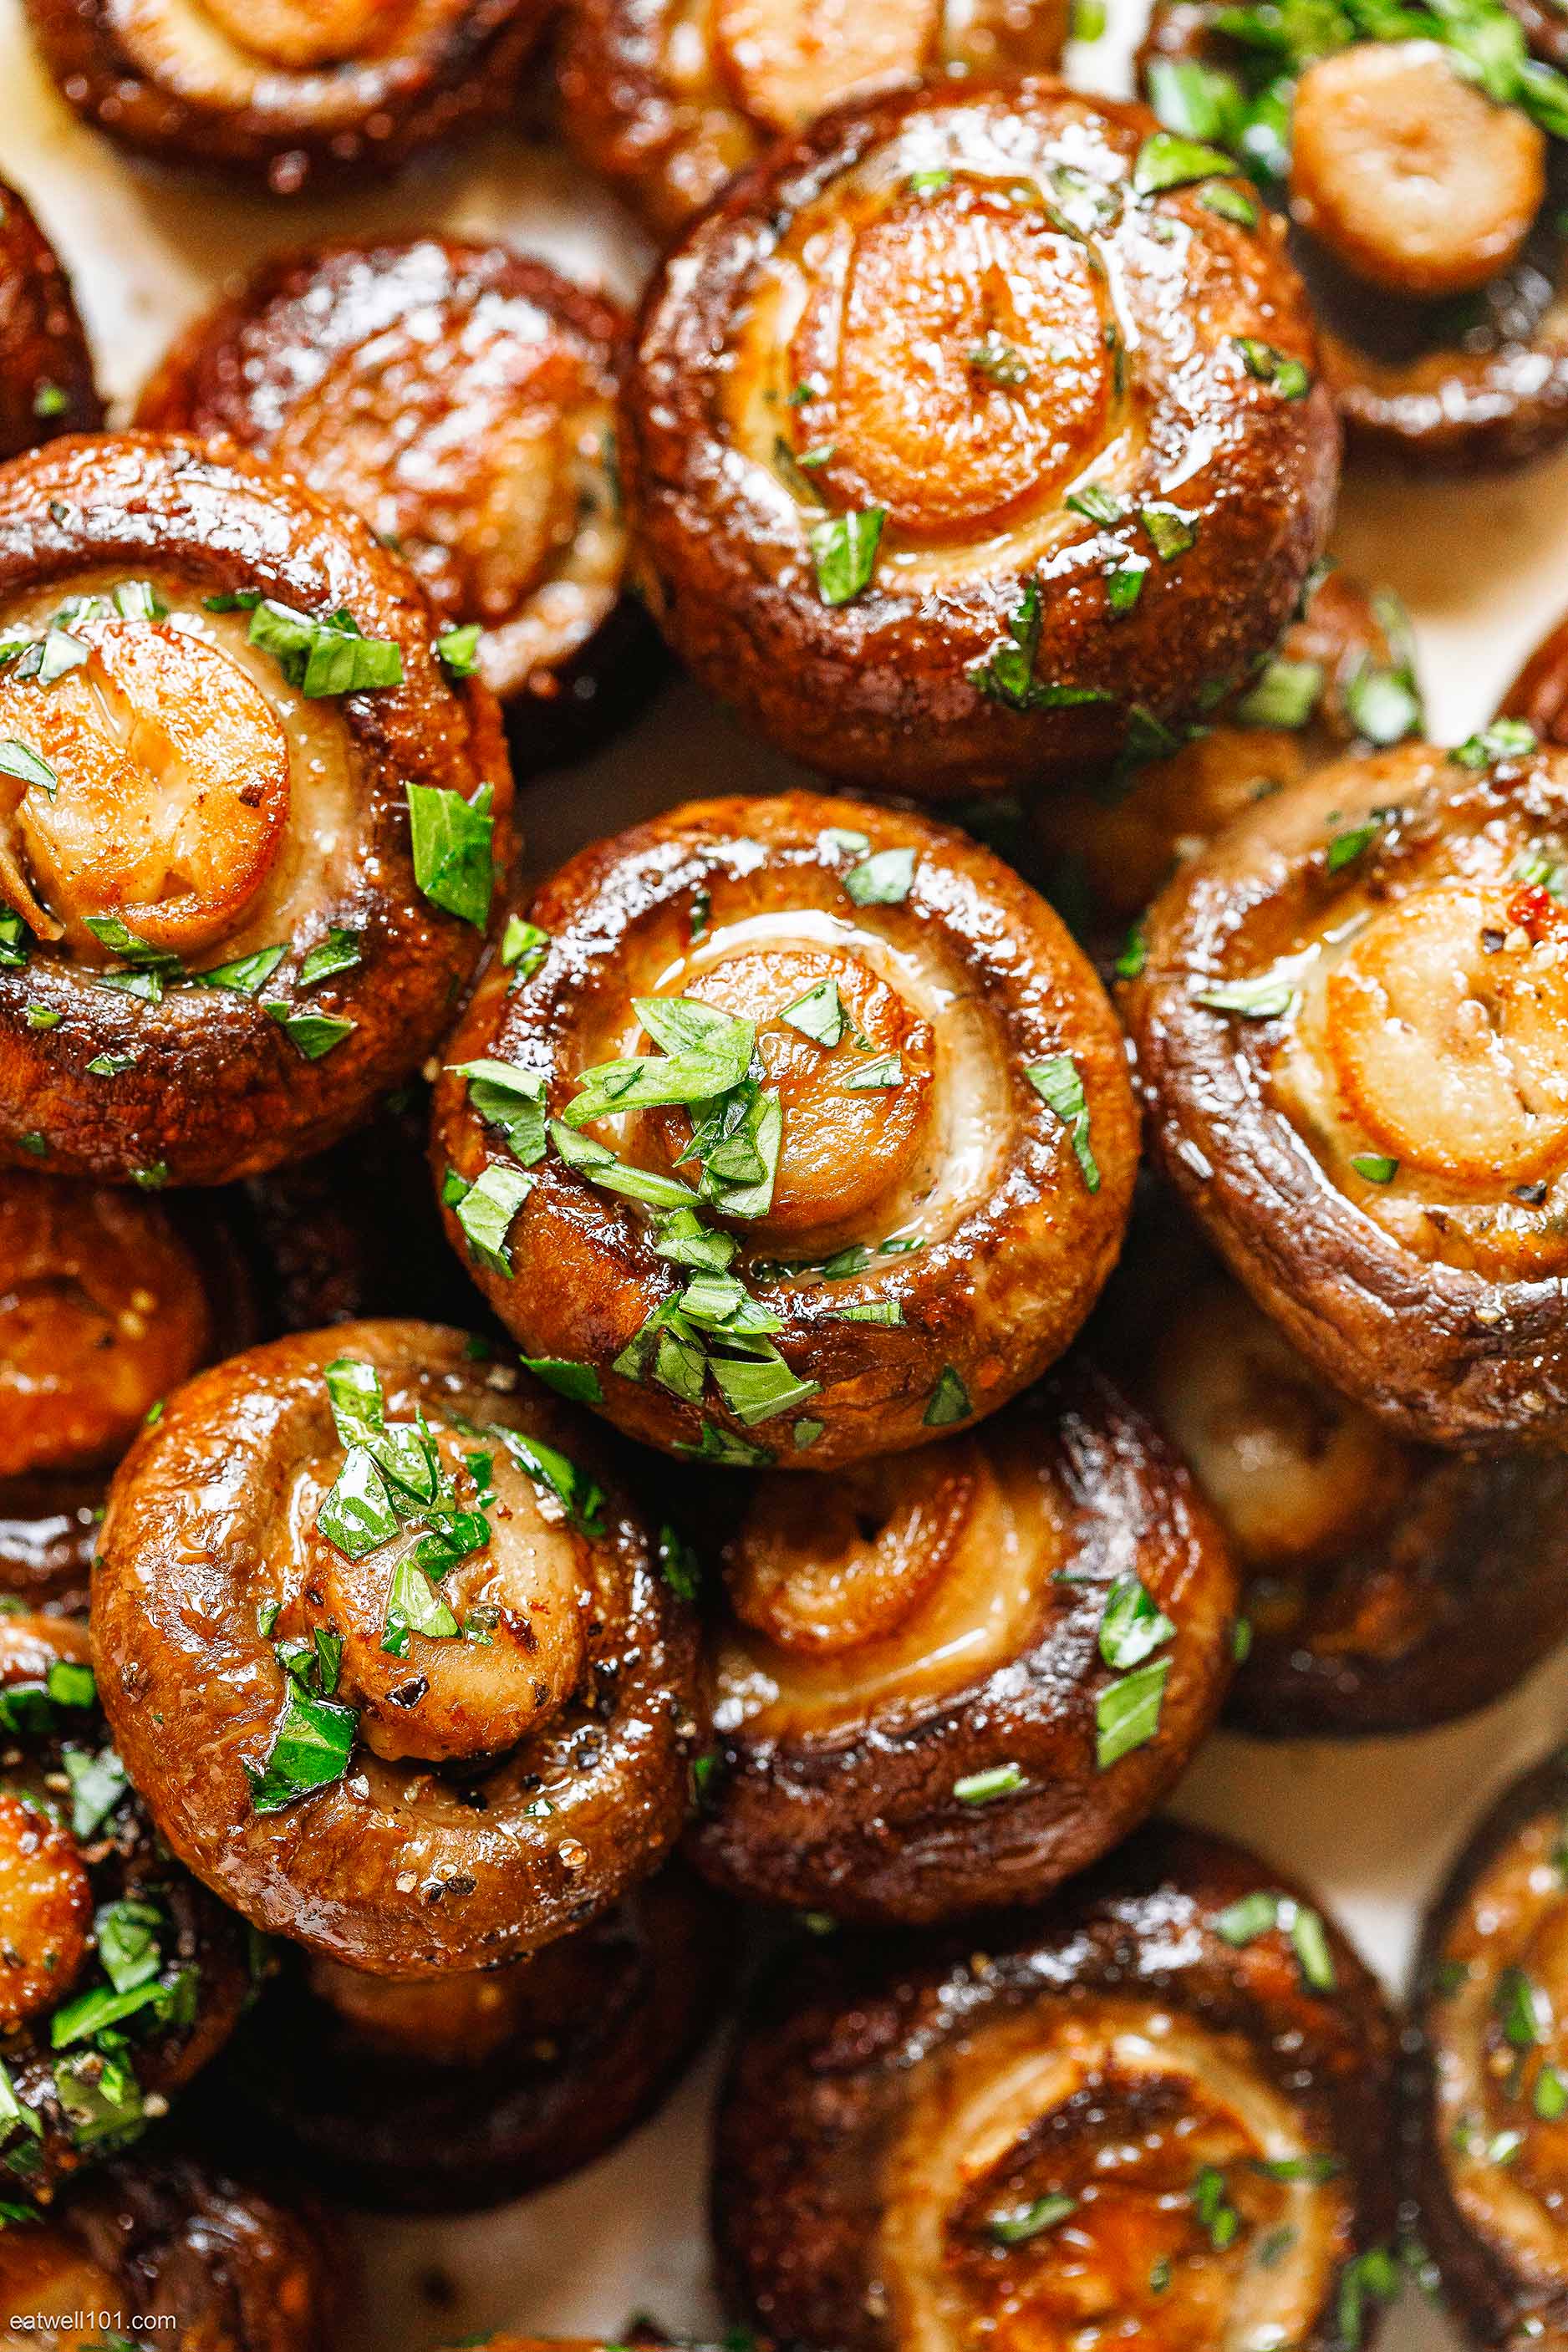 15-Minute Garlic Butter Sautéed Mushrooms - #recipe by #eatwell101 - https://www.eatwell101.com/sauteed-garlic-butter-mushrooms-recipe